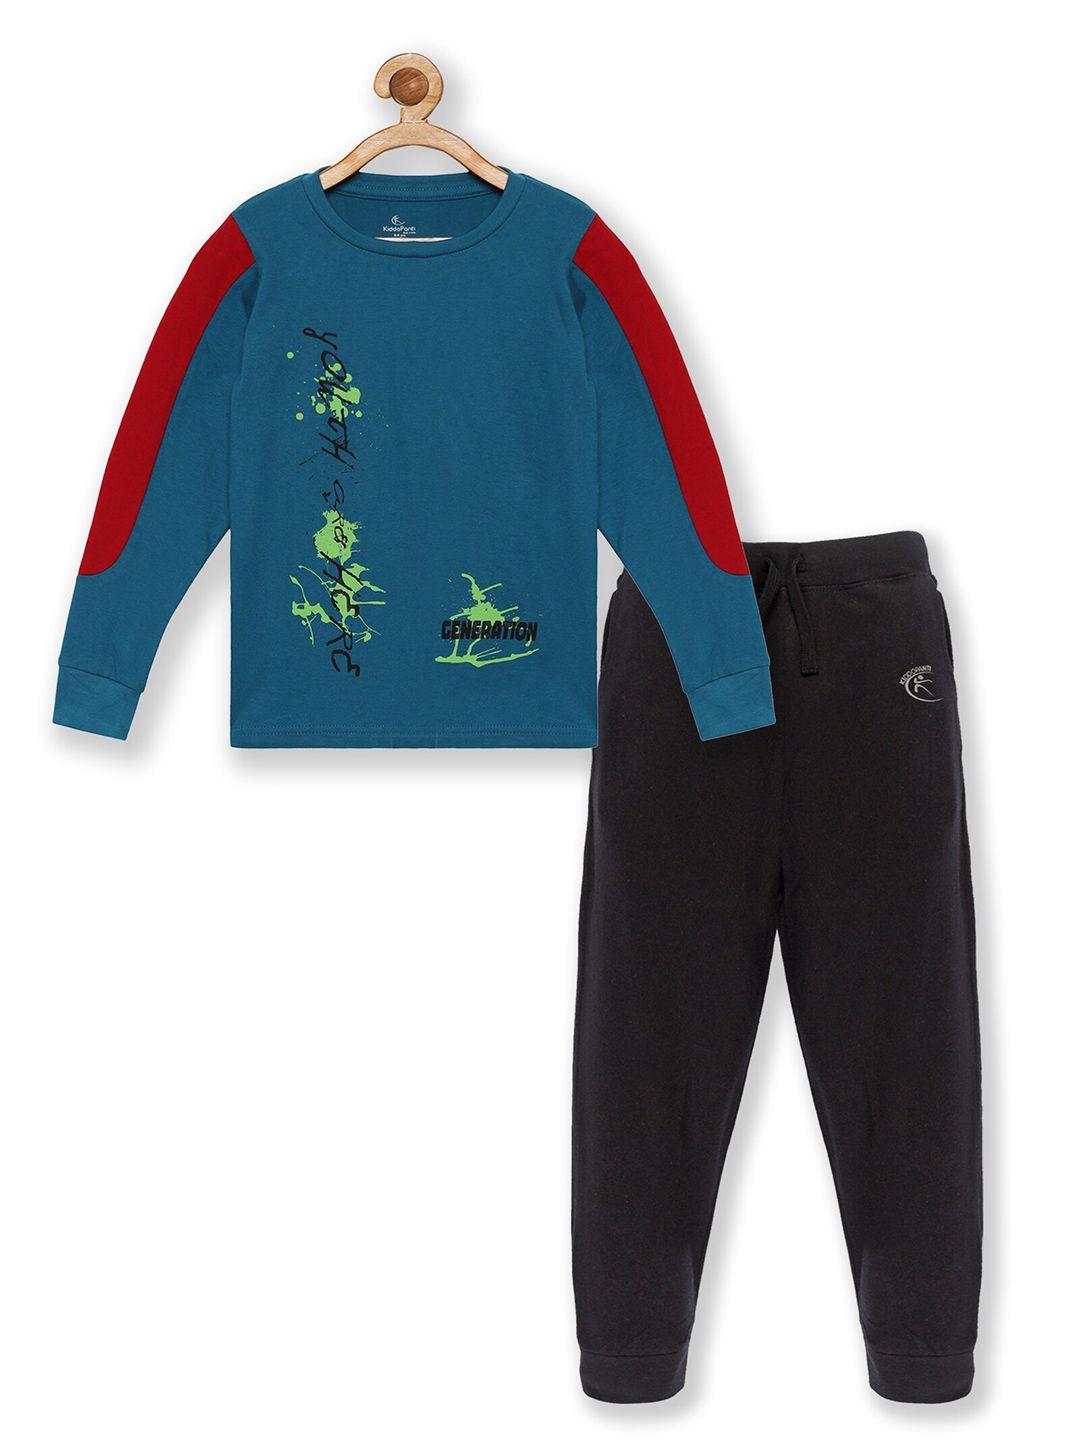 kiddopanti boys teal & black cotton printed t-shirt and pyjama set